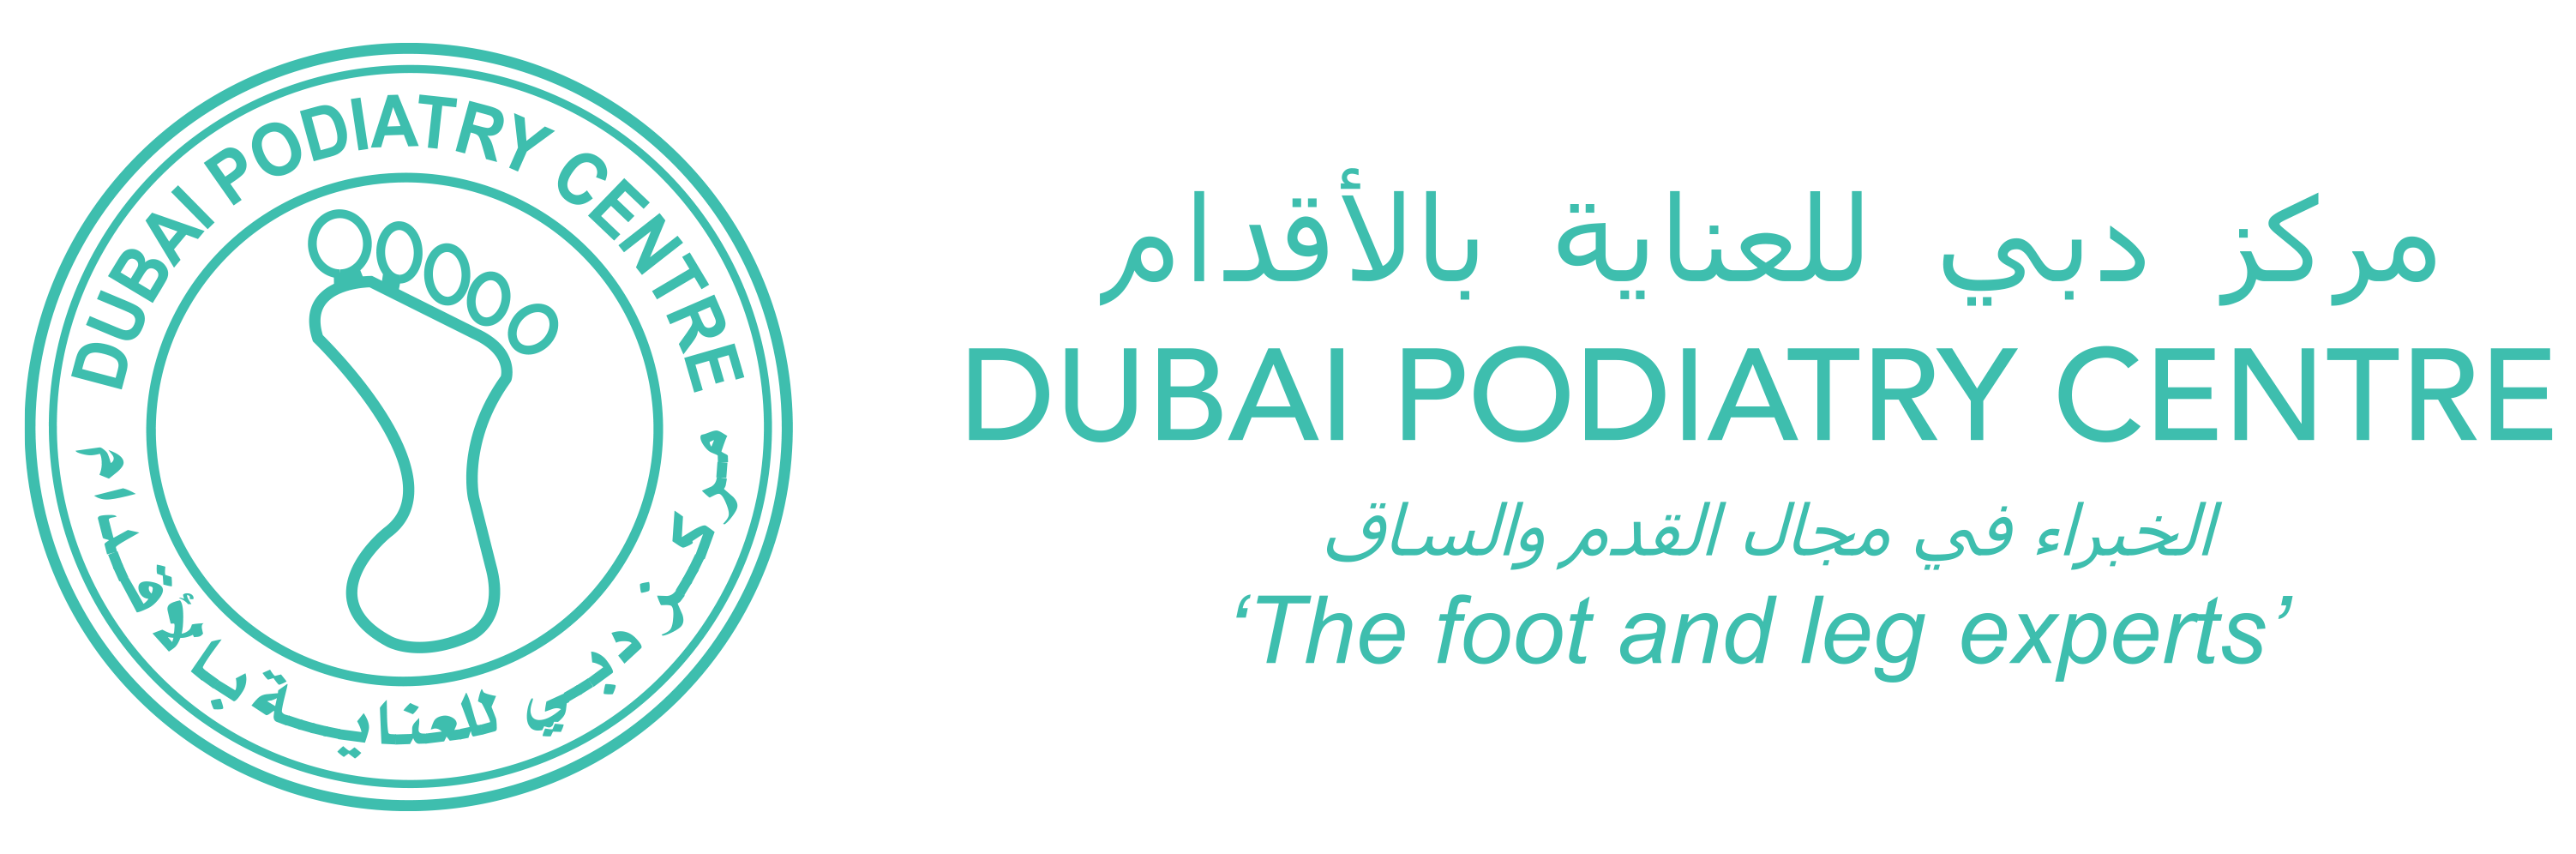 Dubai Podiatry Centre